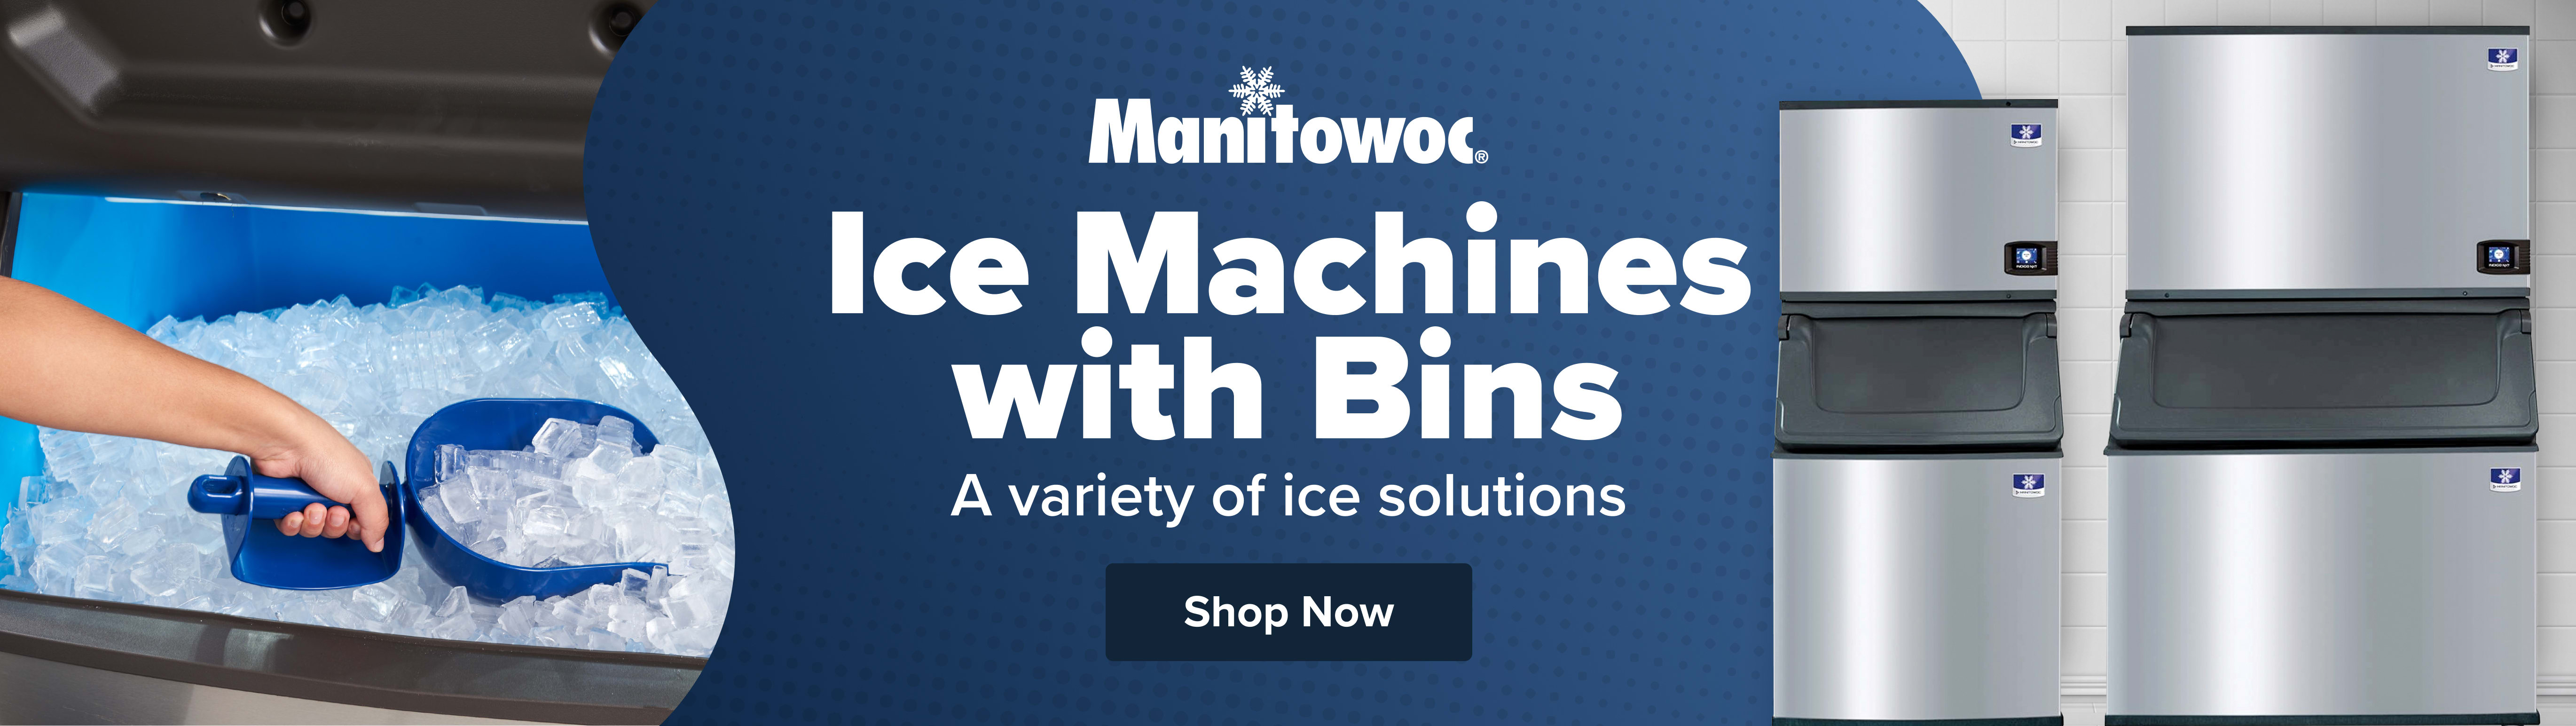 Manitowoc Ice Machines and Bins